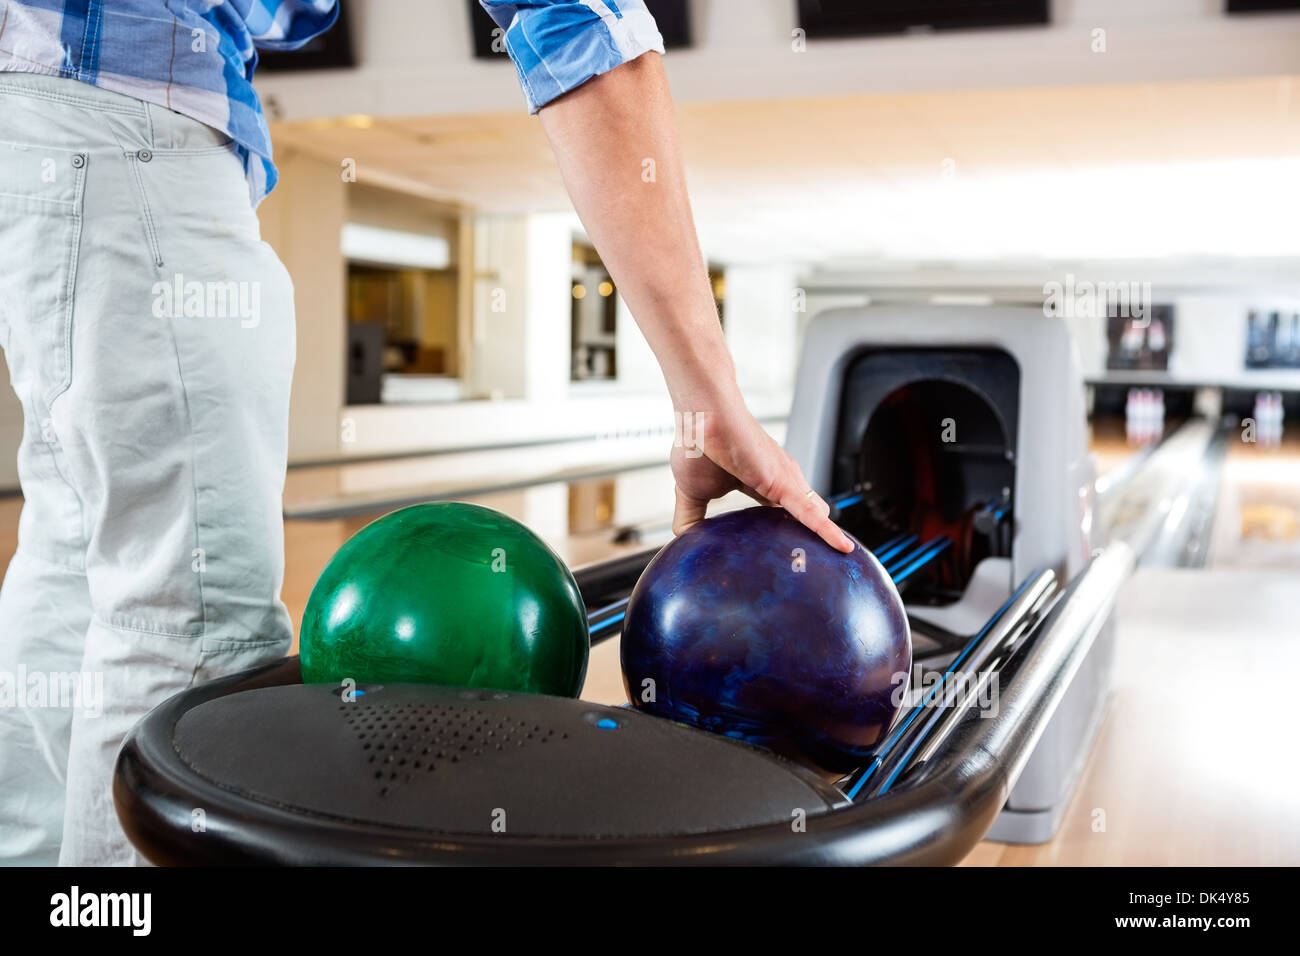 Menschenhand Abholung Bowling-Kugel von Rack Stockfoto